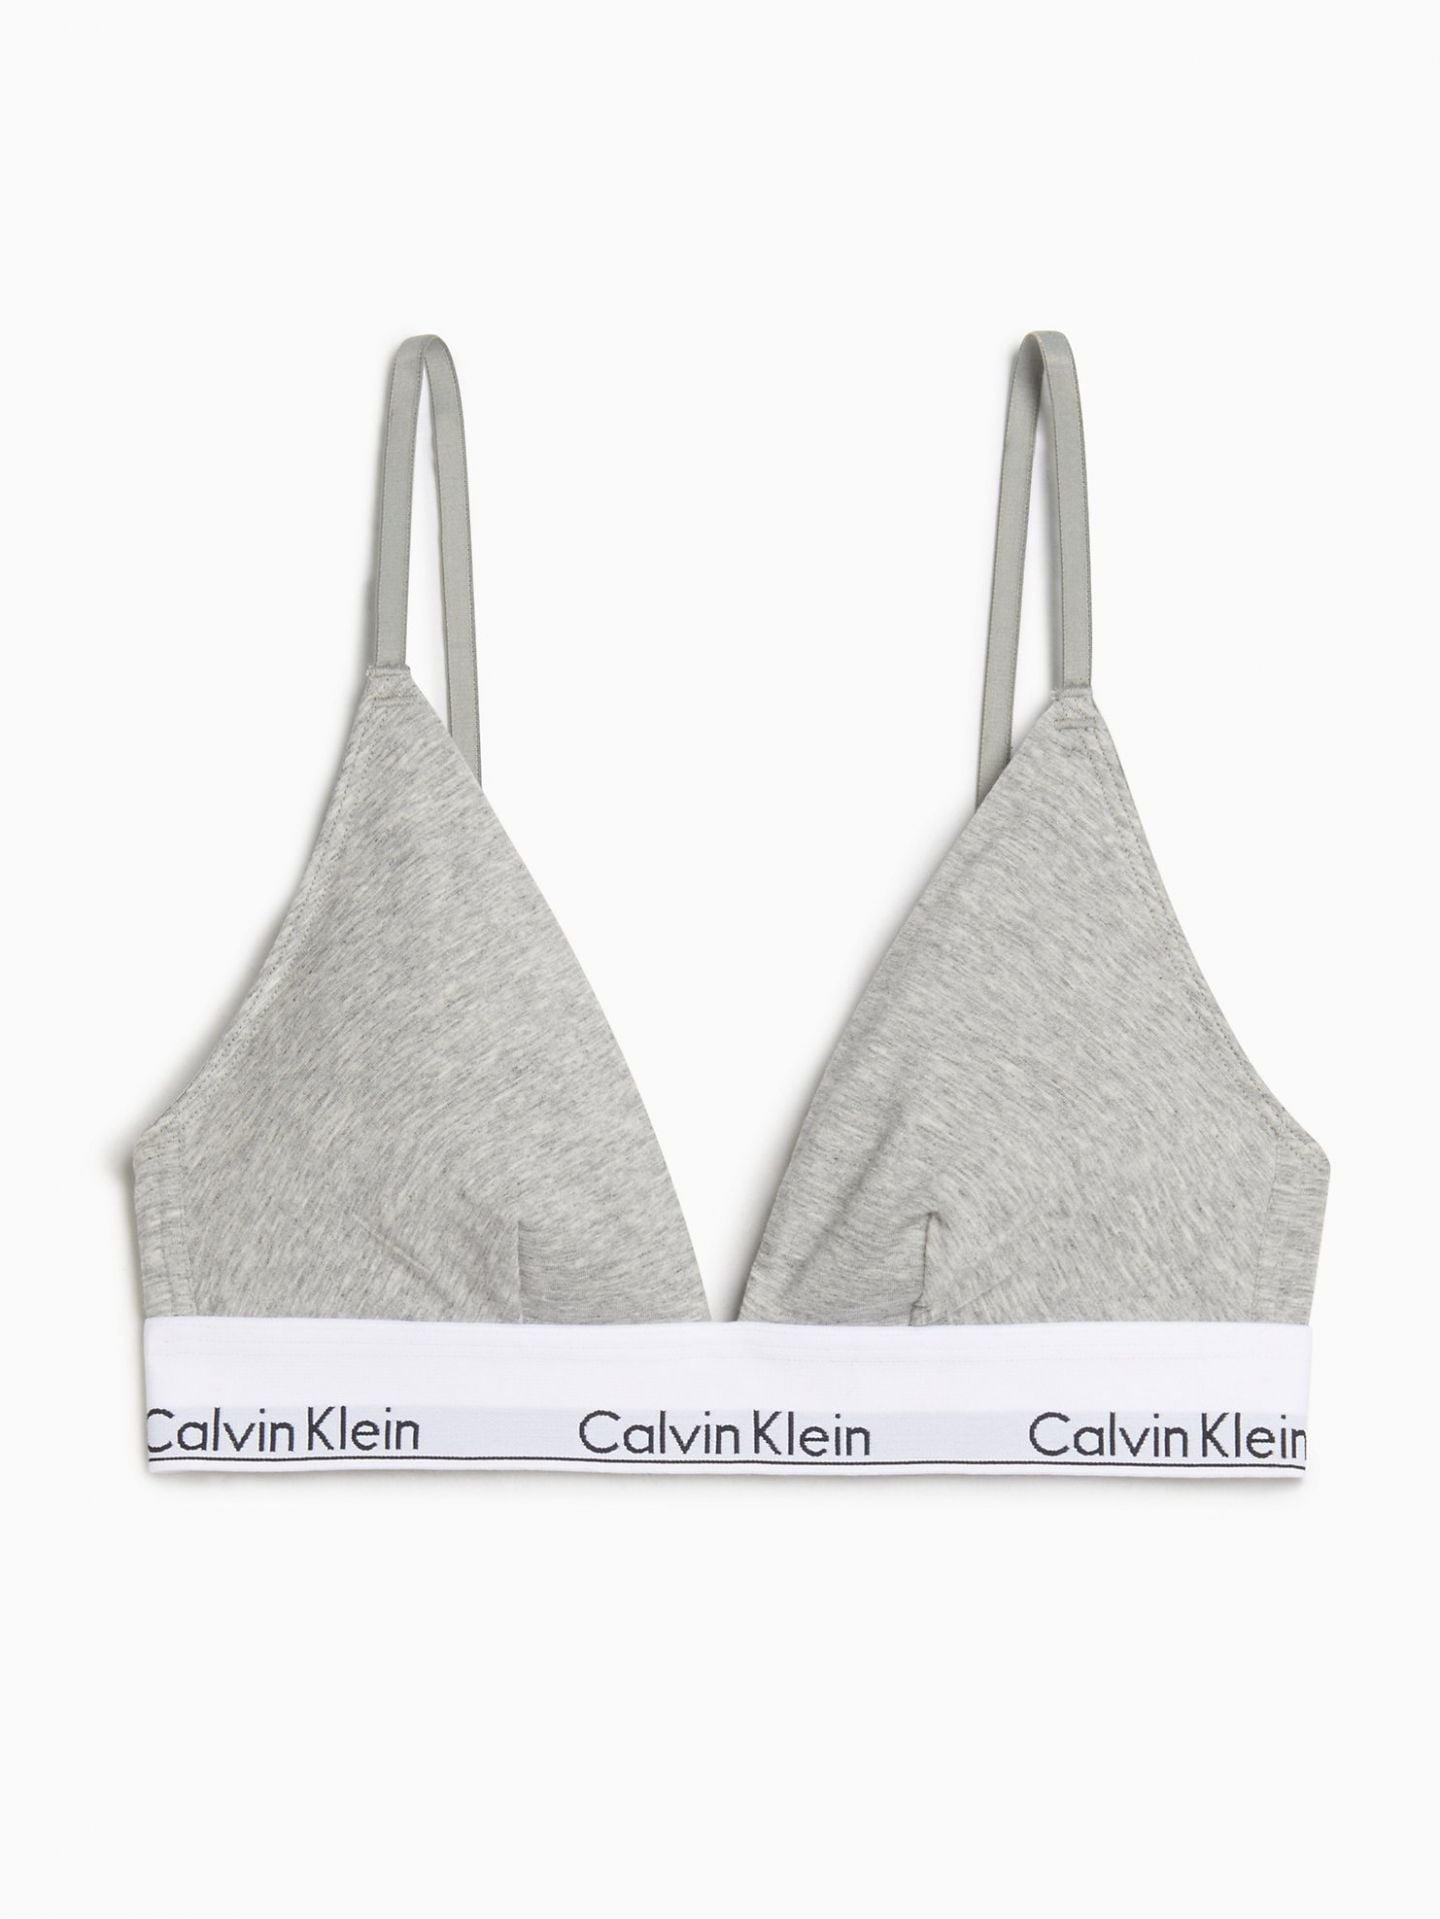 Calvin Klein Modern Cotton Triangle Bralette QF1061 – Underwire Bra Boutique